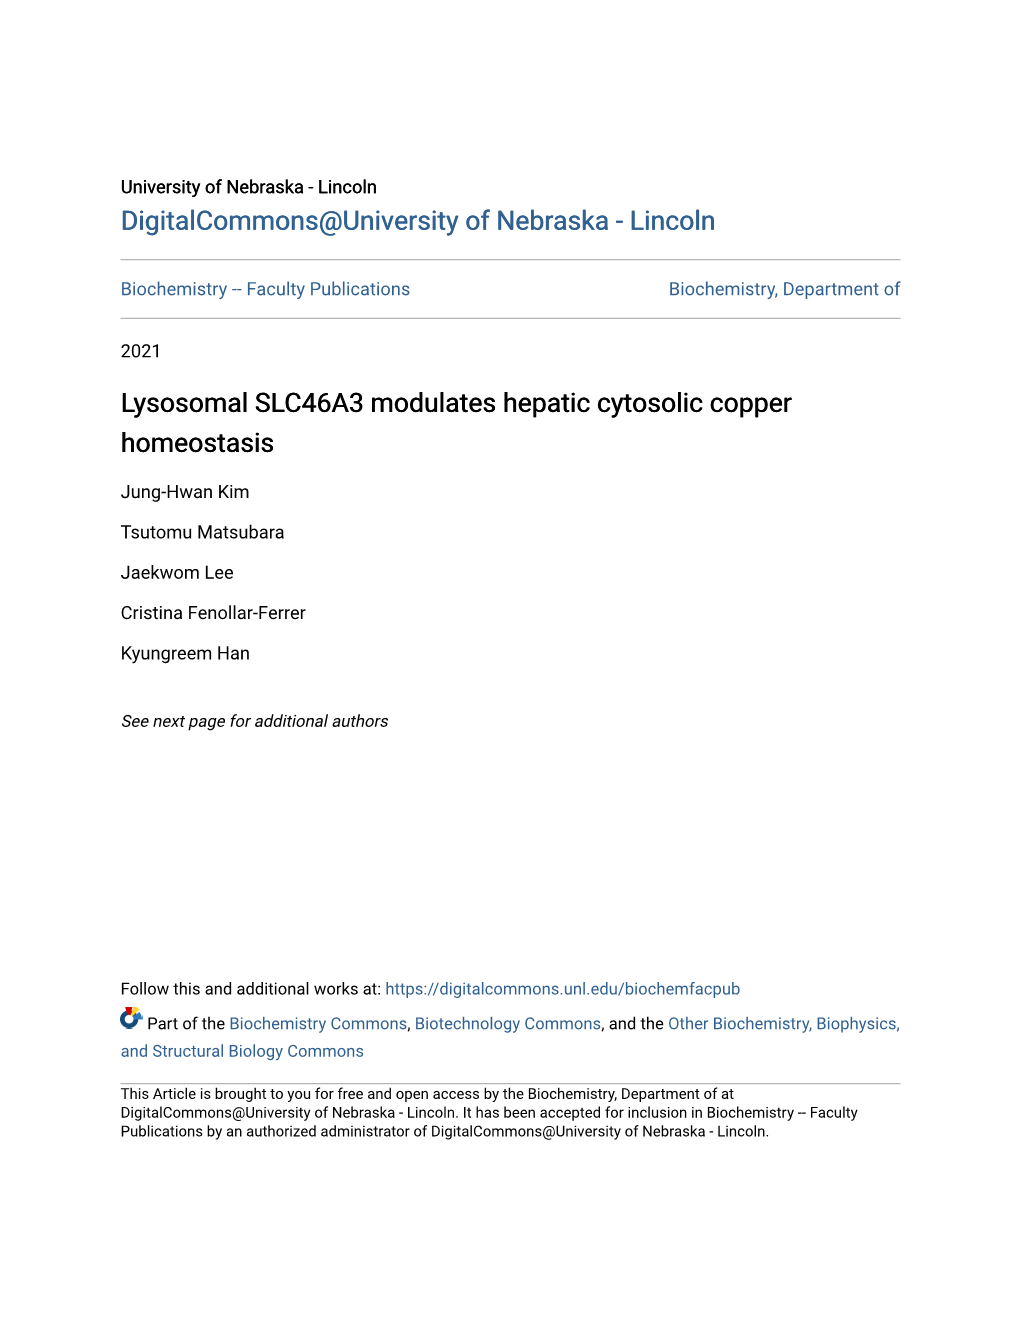 Lysosomal SLC46A3 Modulates Hepatic Cytosolic Copper Homeostasis